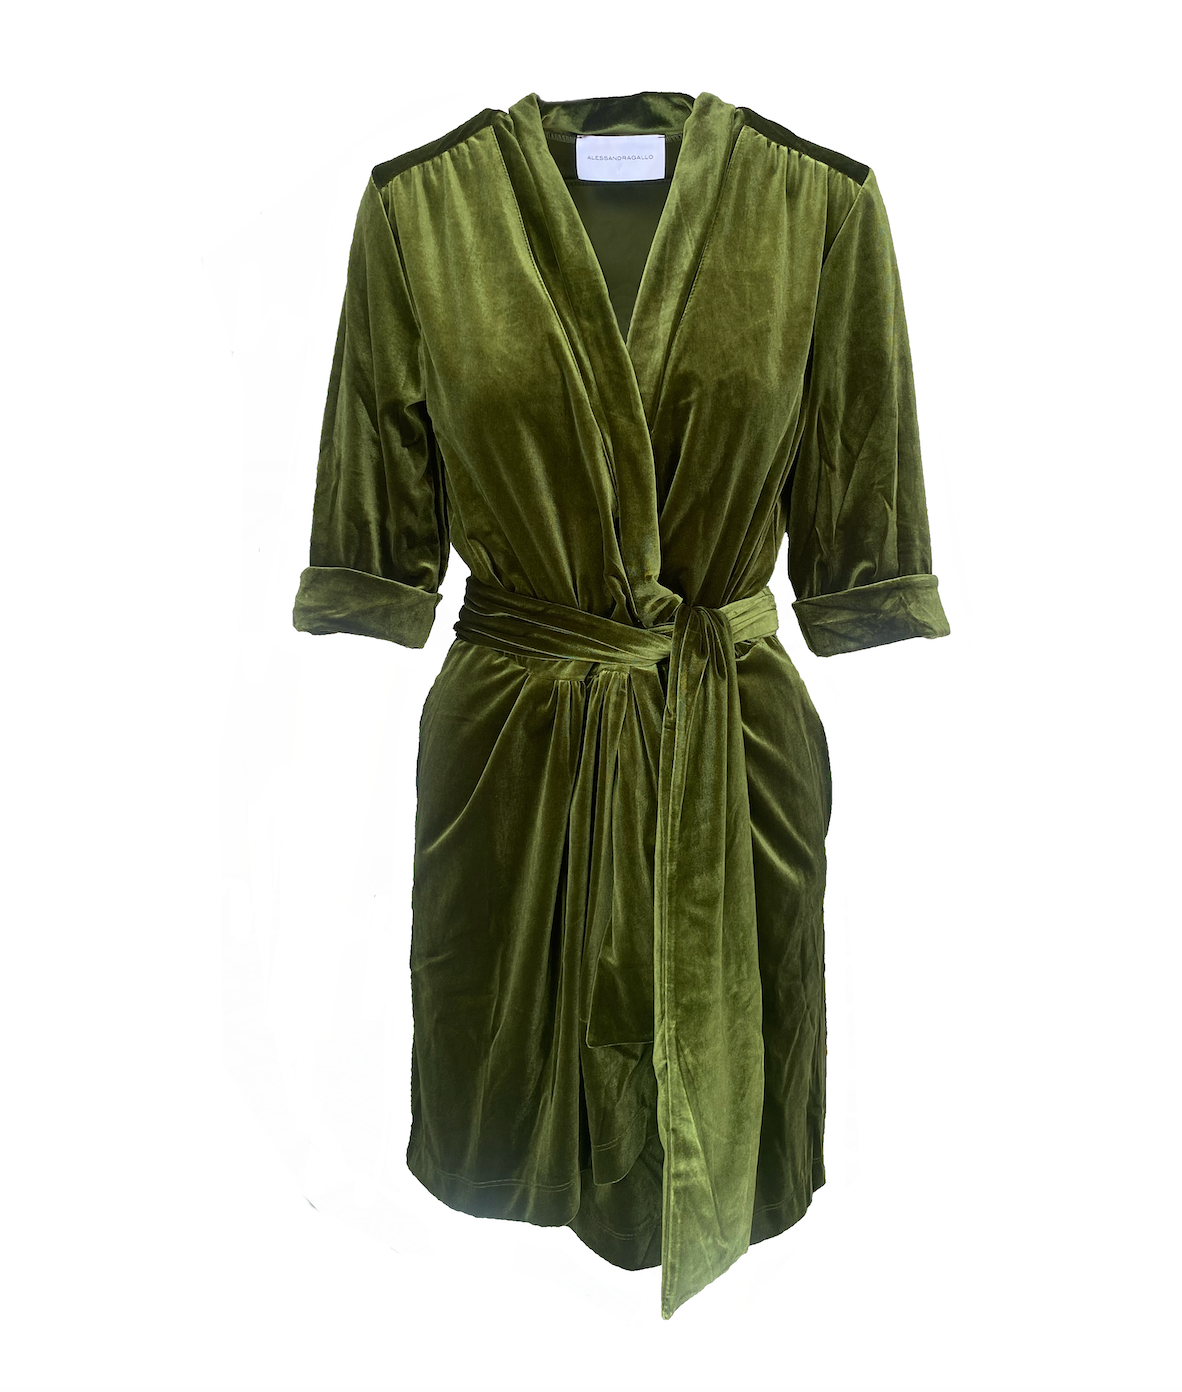 GINEVRA MINI - short dress in green chenille